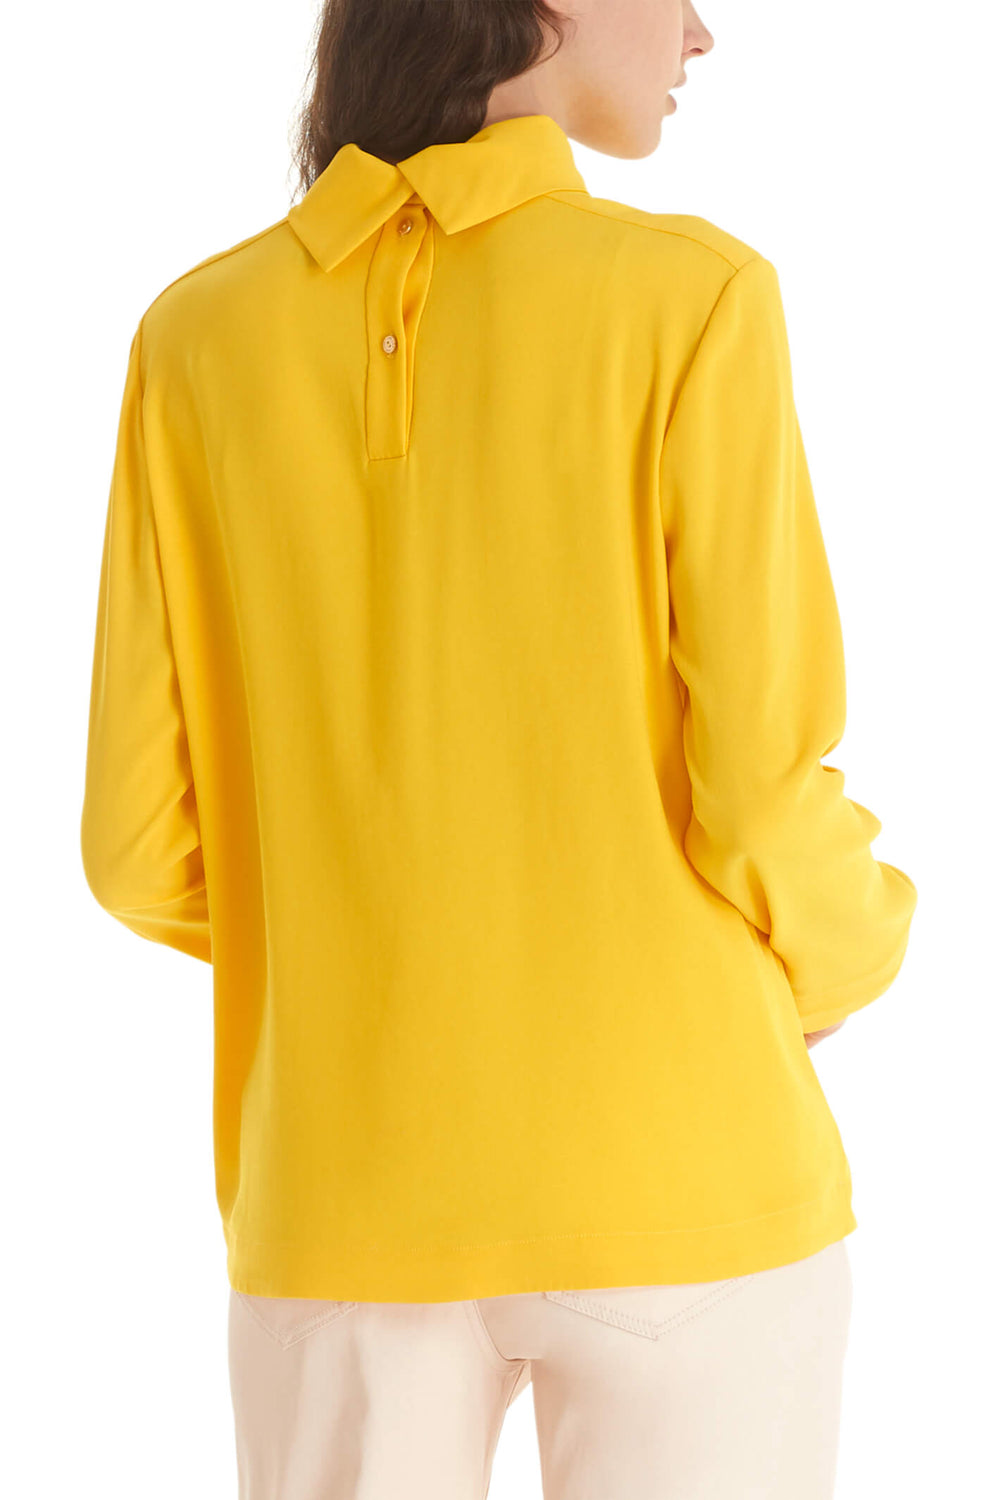 Marc Cain TC 55.13 W01 Saffron Yellow Reverse Collar Top - Olivia Grace Fashion